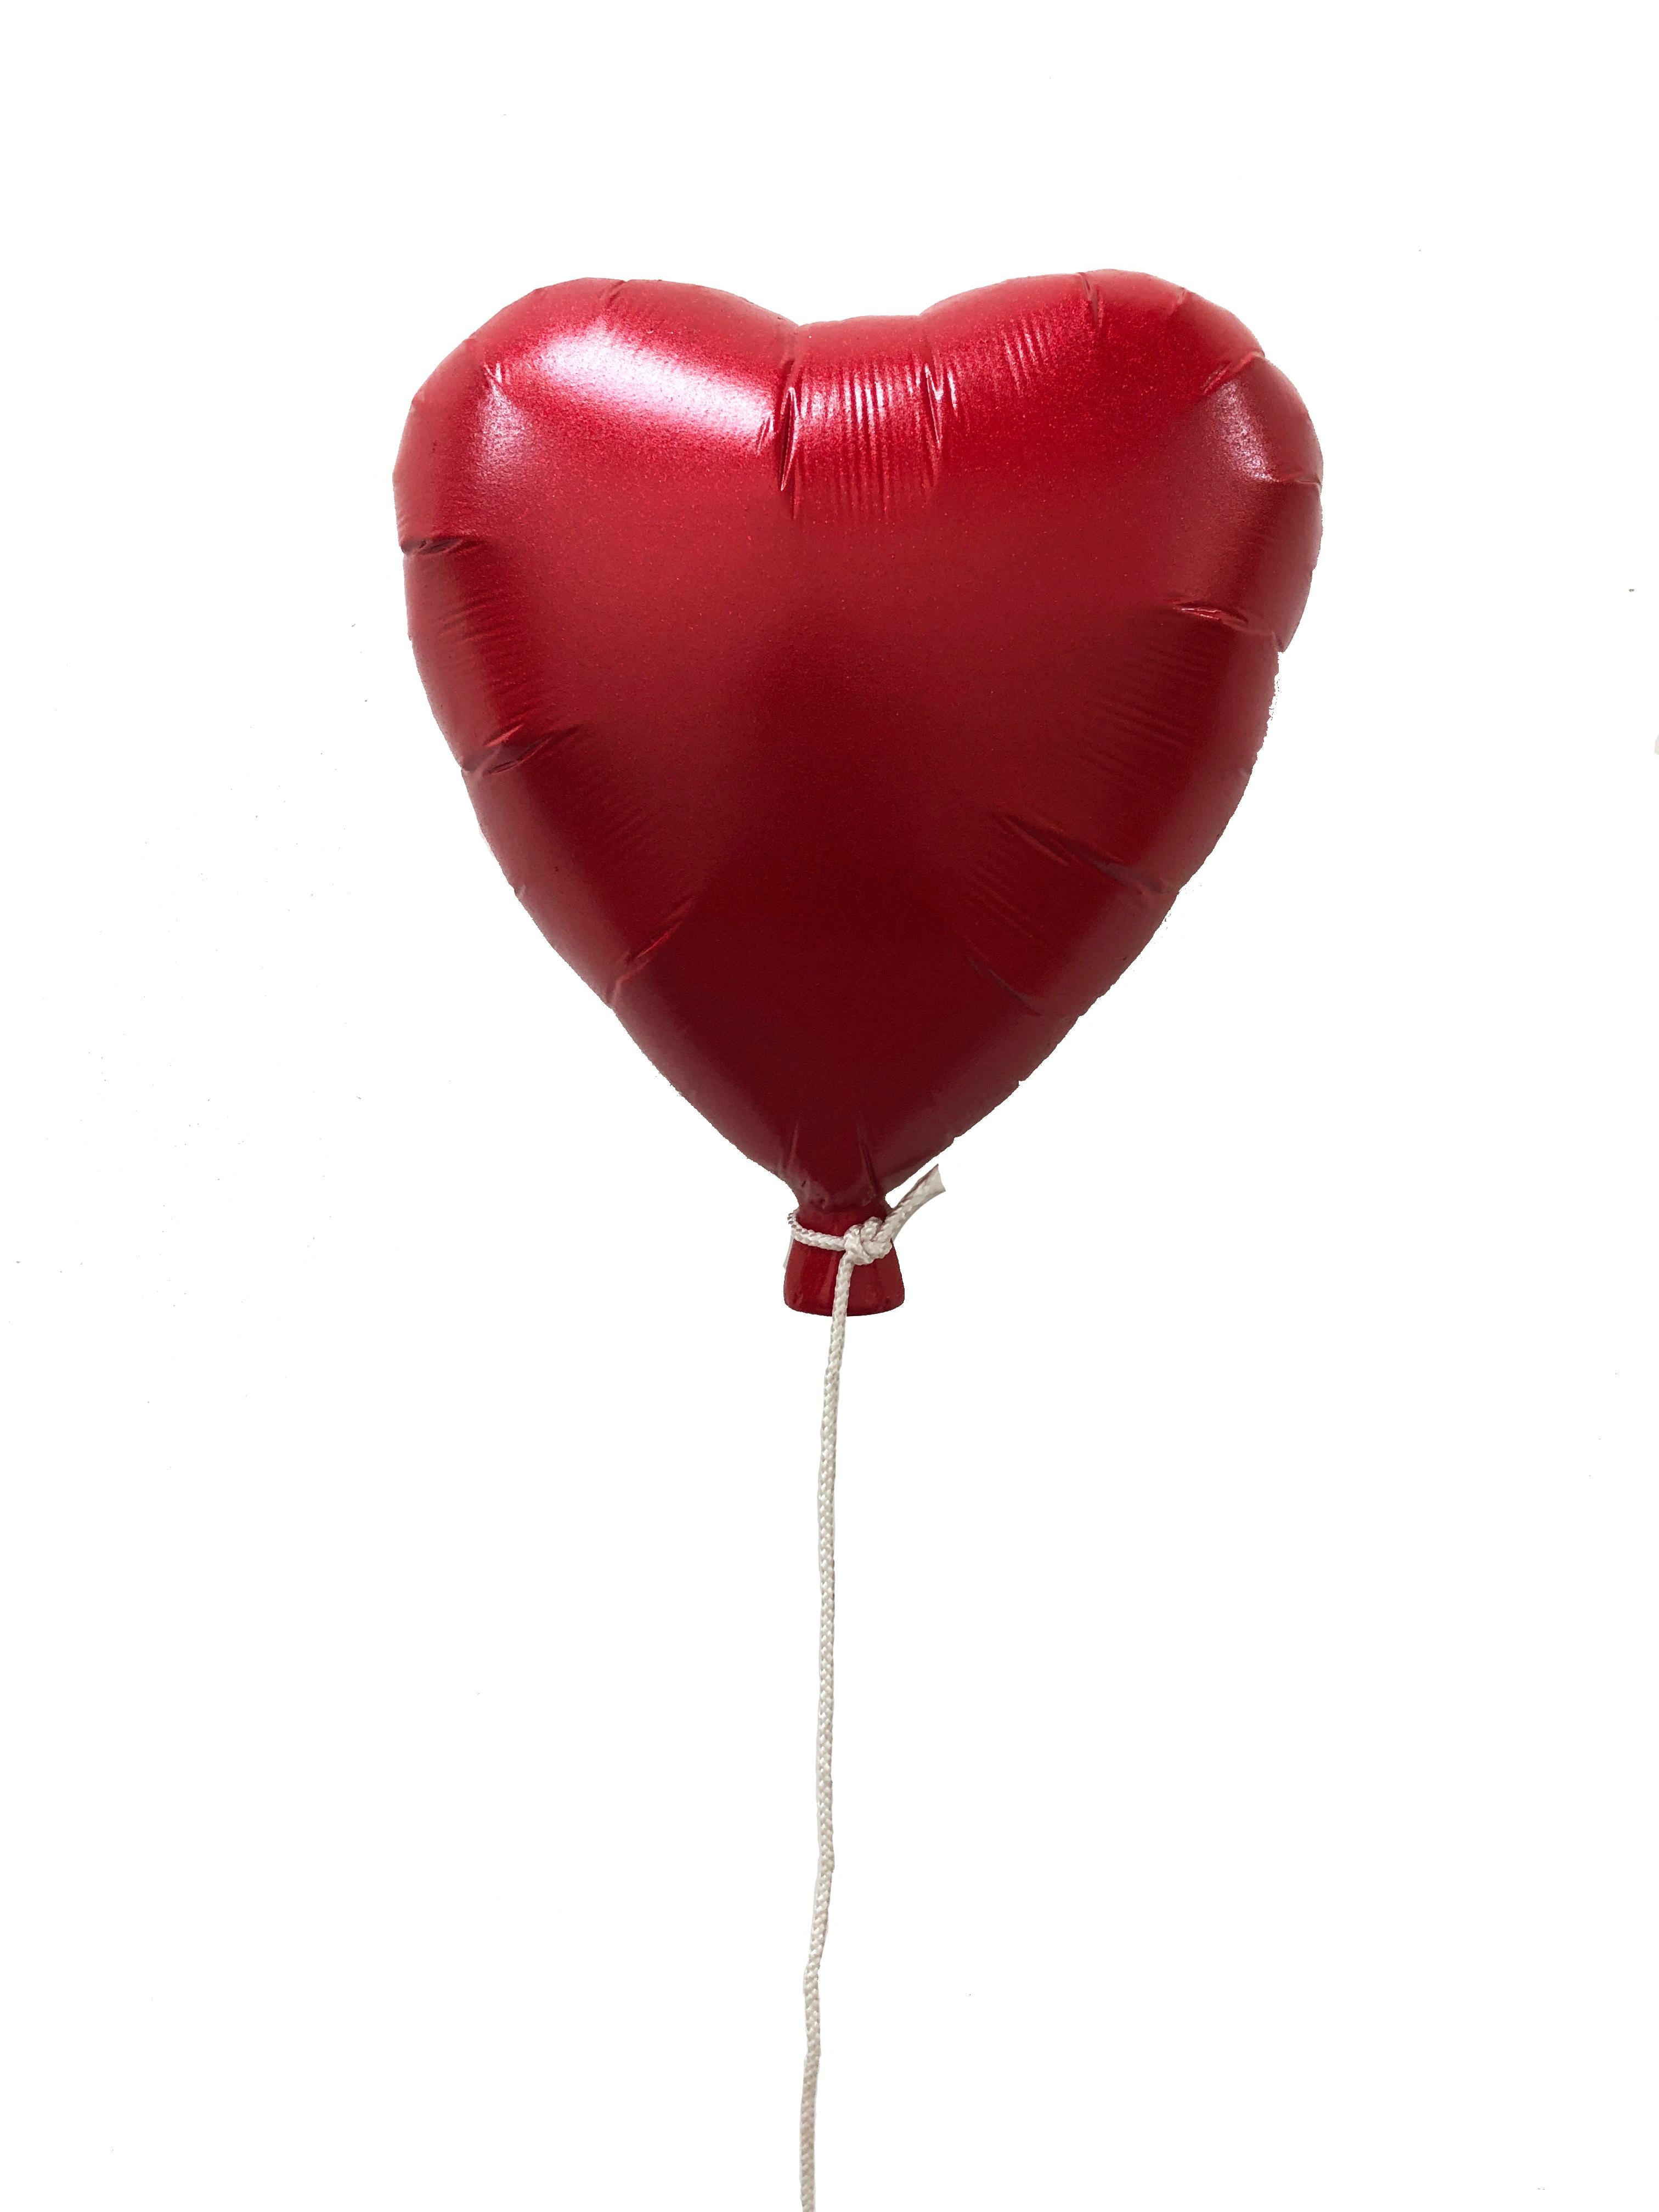 Balloon Heart - Mixed Media Art by Plastic Jesus